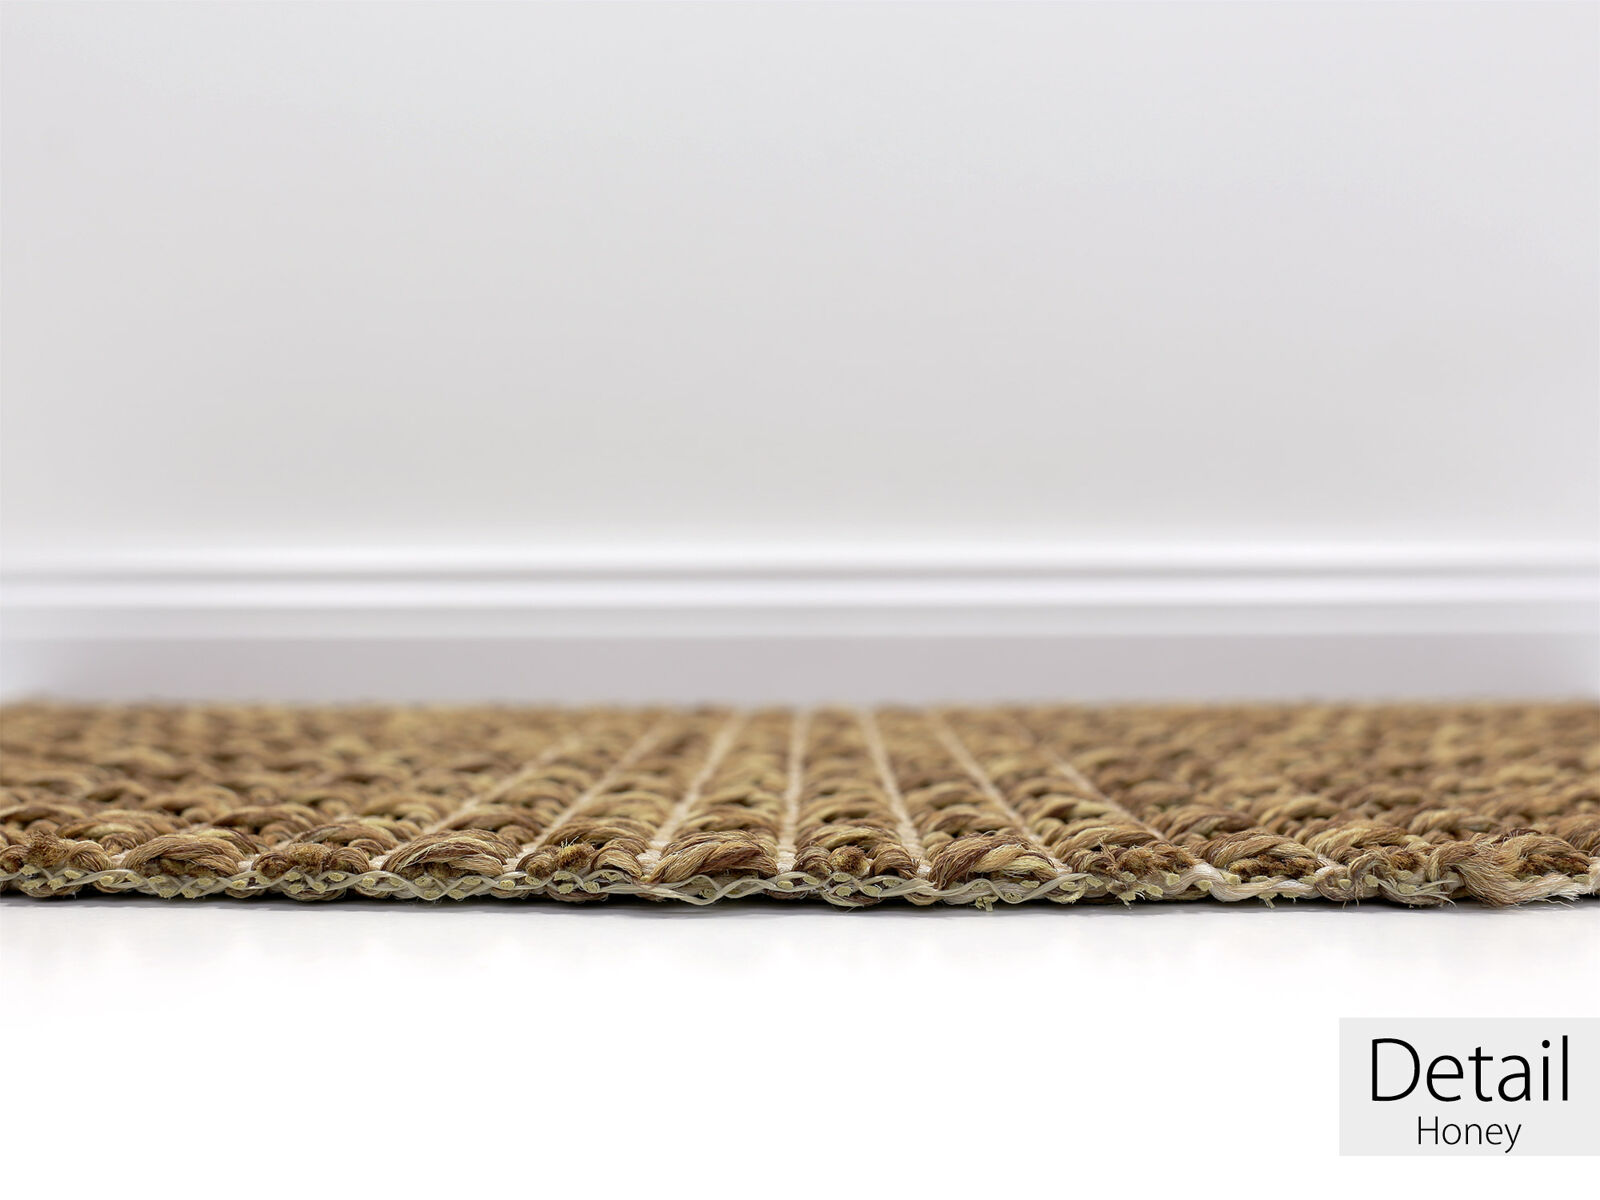 Thore Teppichboden | gemustertes Flachgewebe | 380cm Breite & Raummaß